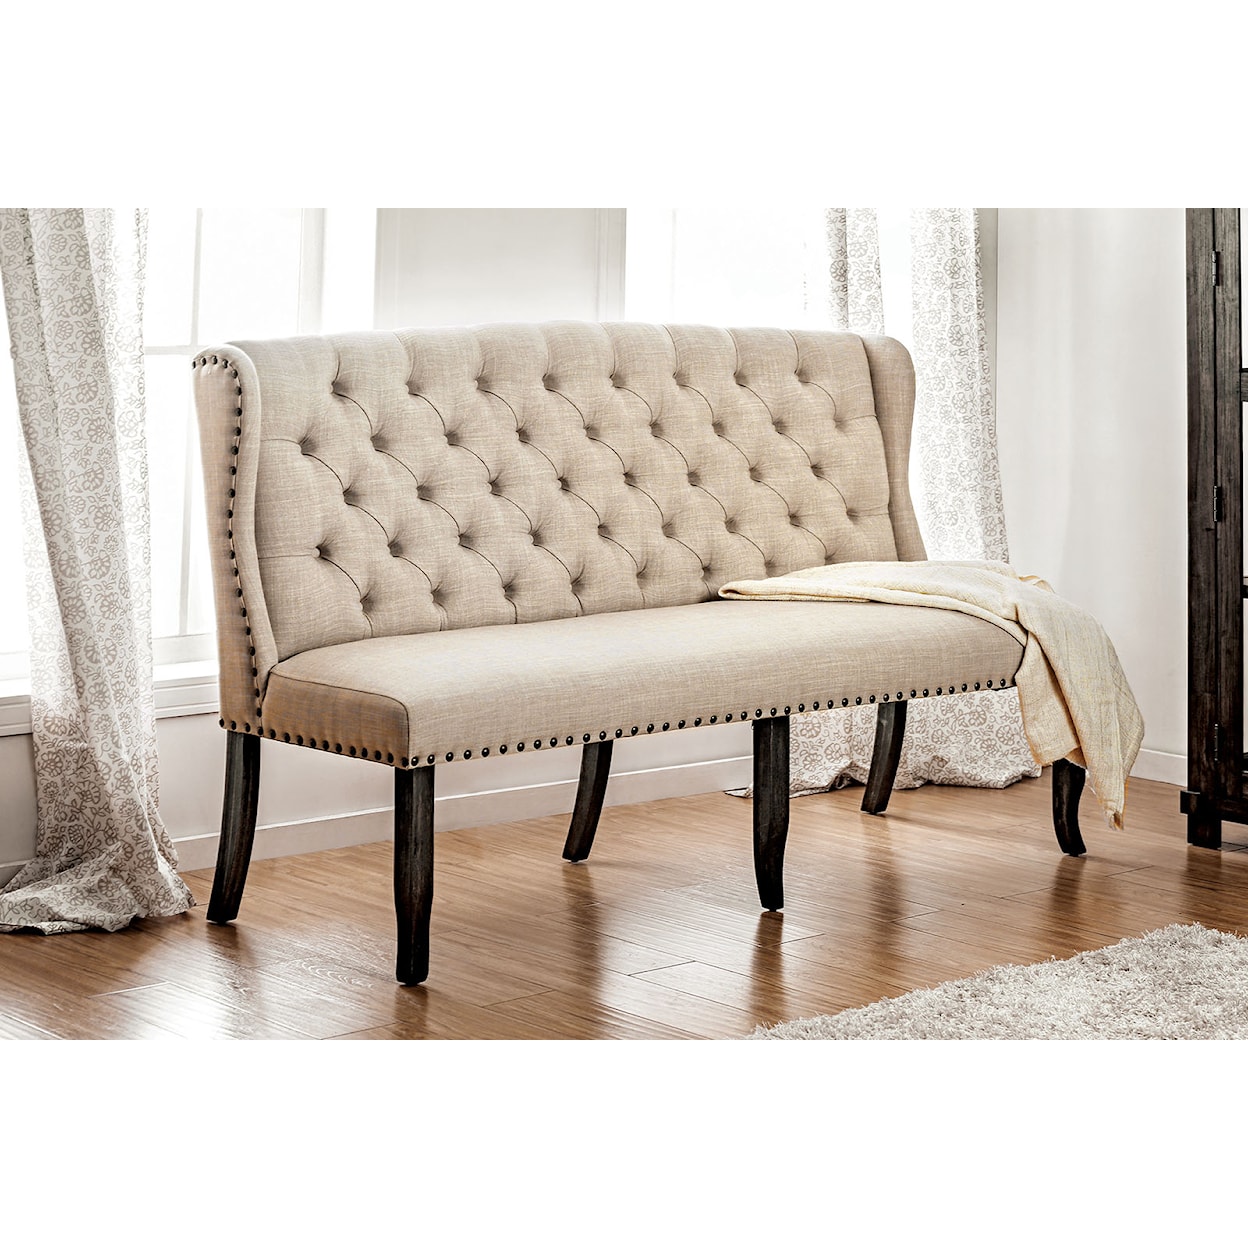 Furniture of America Sania III 3-Seater Loveseat Bench